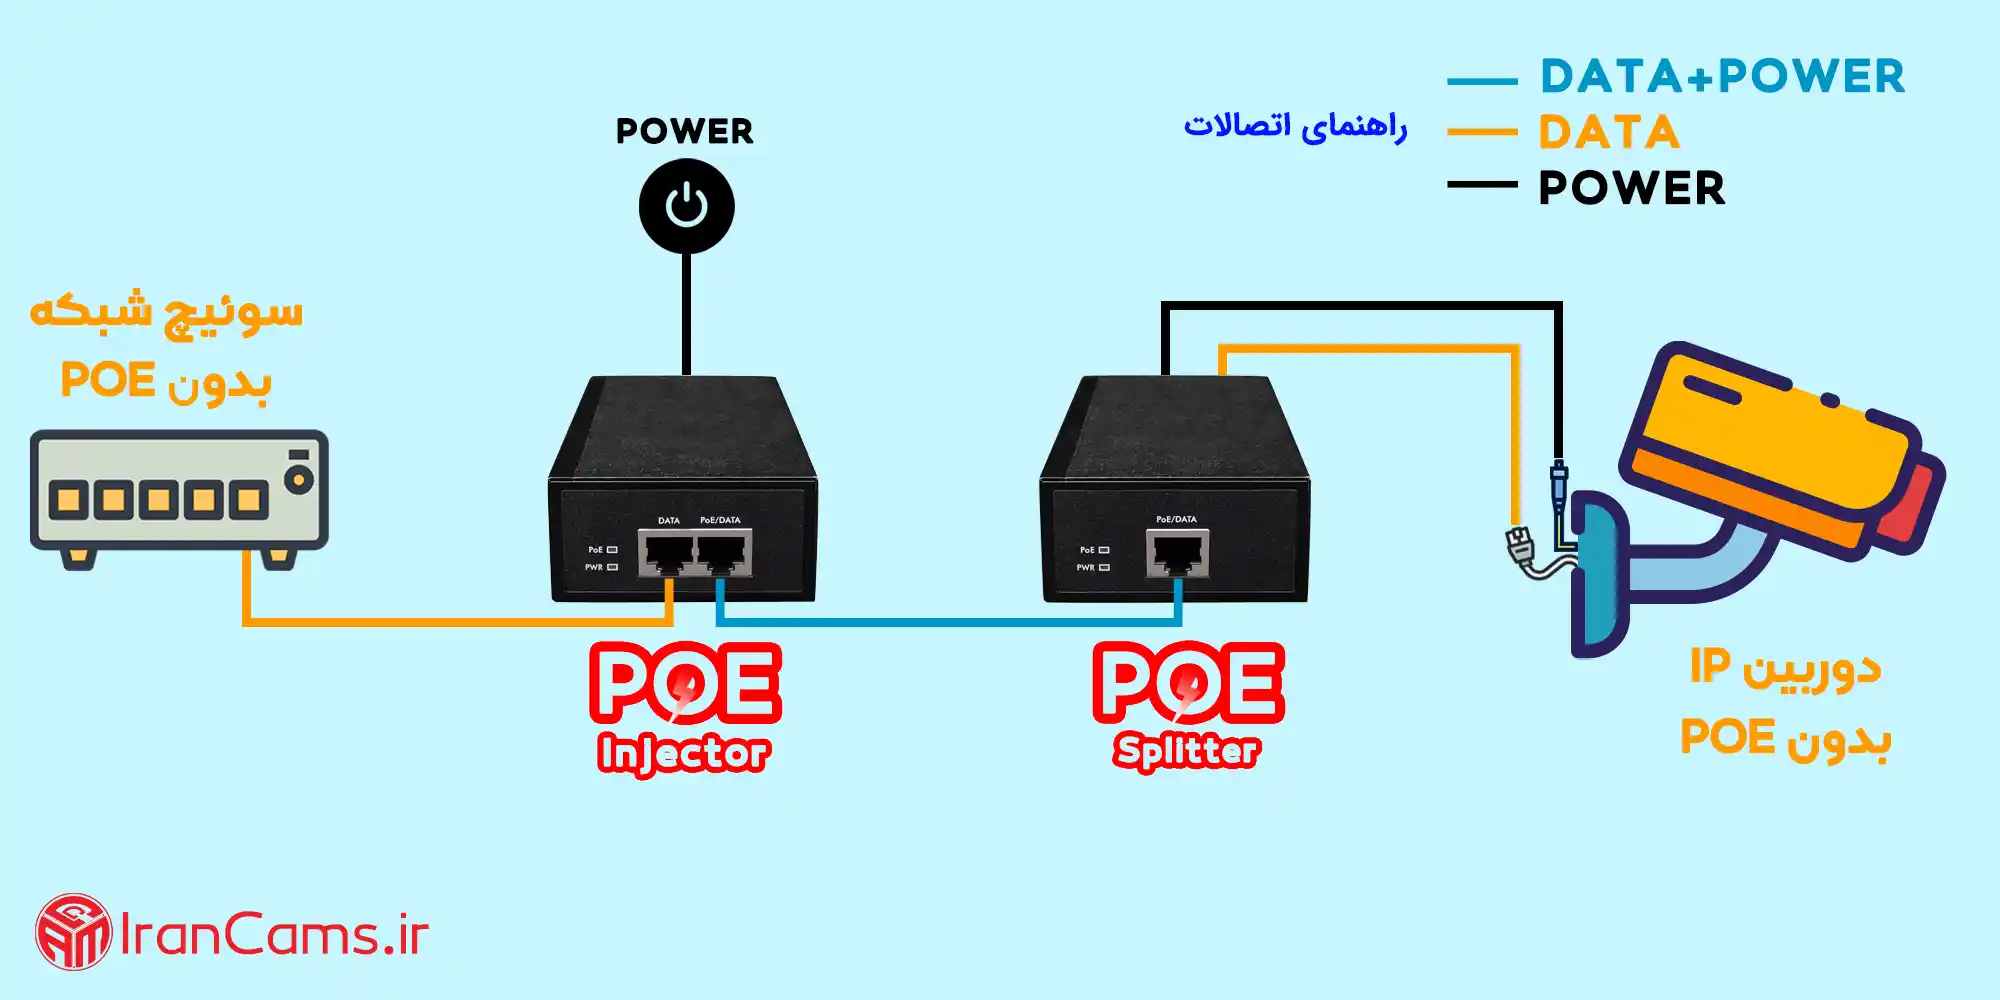 اسپلیتر POE اینجکتور POE اسپلیتر شبکه سوئیچ POE دوربین POE POE شبکه irancams.ir